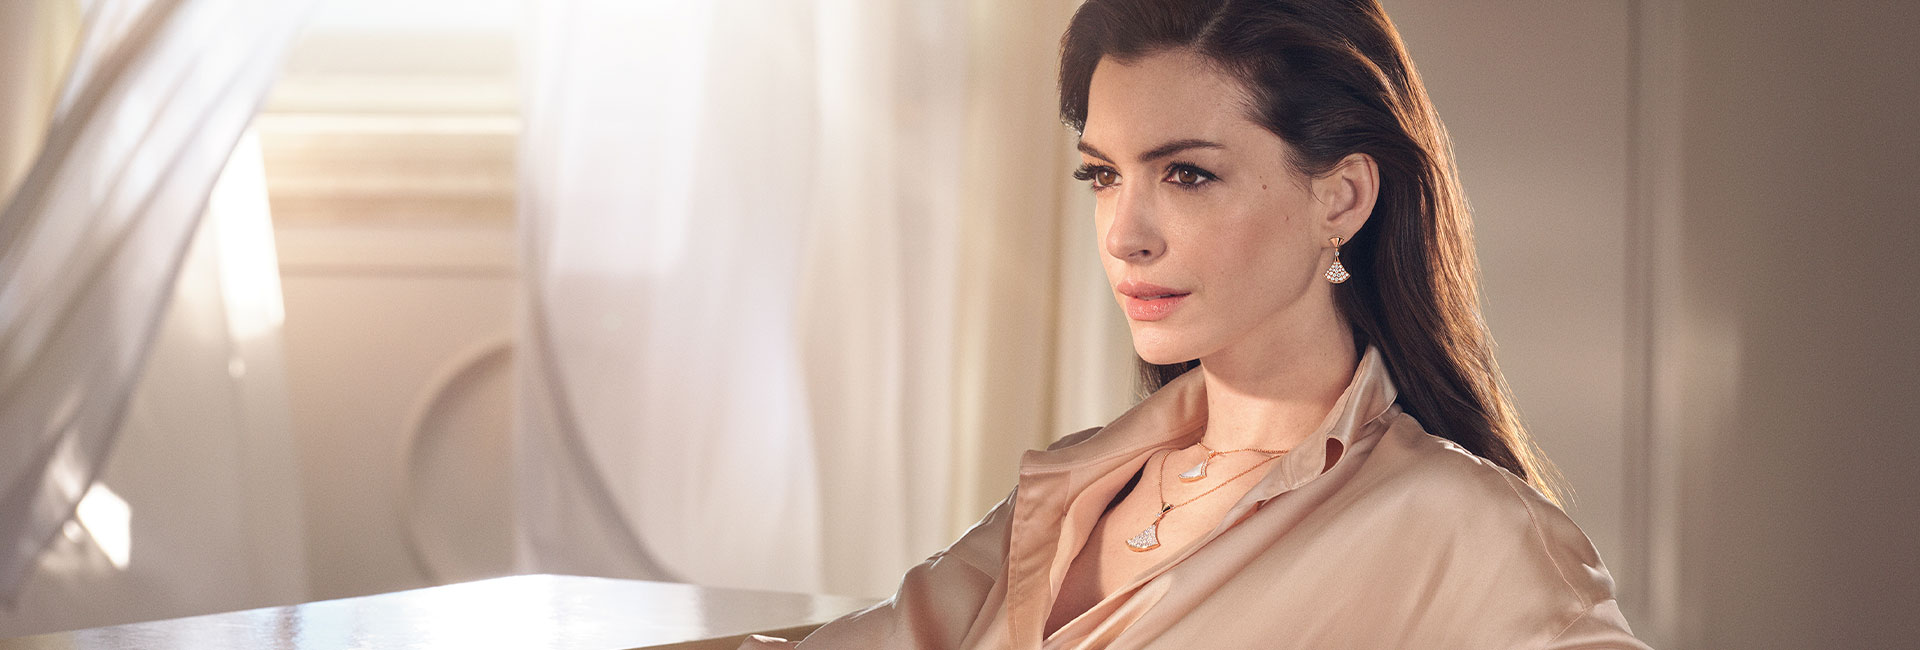 Anne Hathaway wearing Divas' Dream jewellery and Divas' Dream pendant necklaces against a white backdrop.